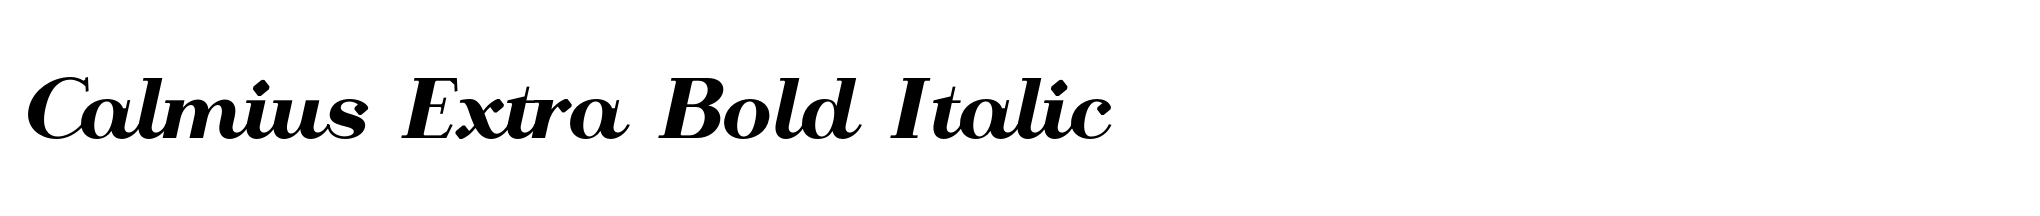 Calmius Extra Bold Italic image